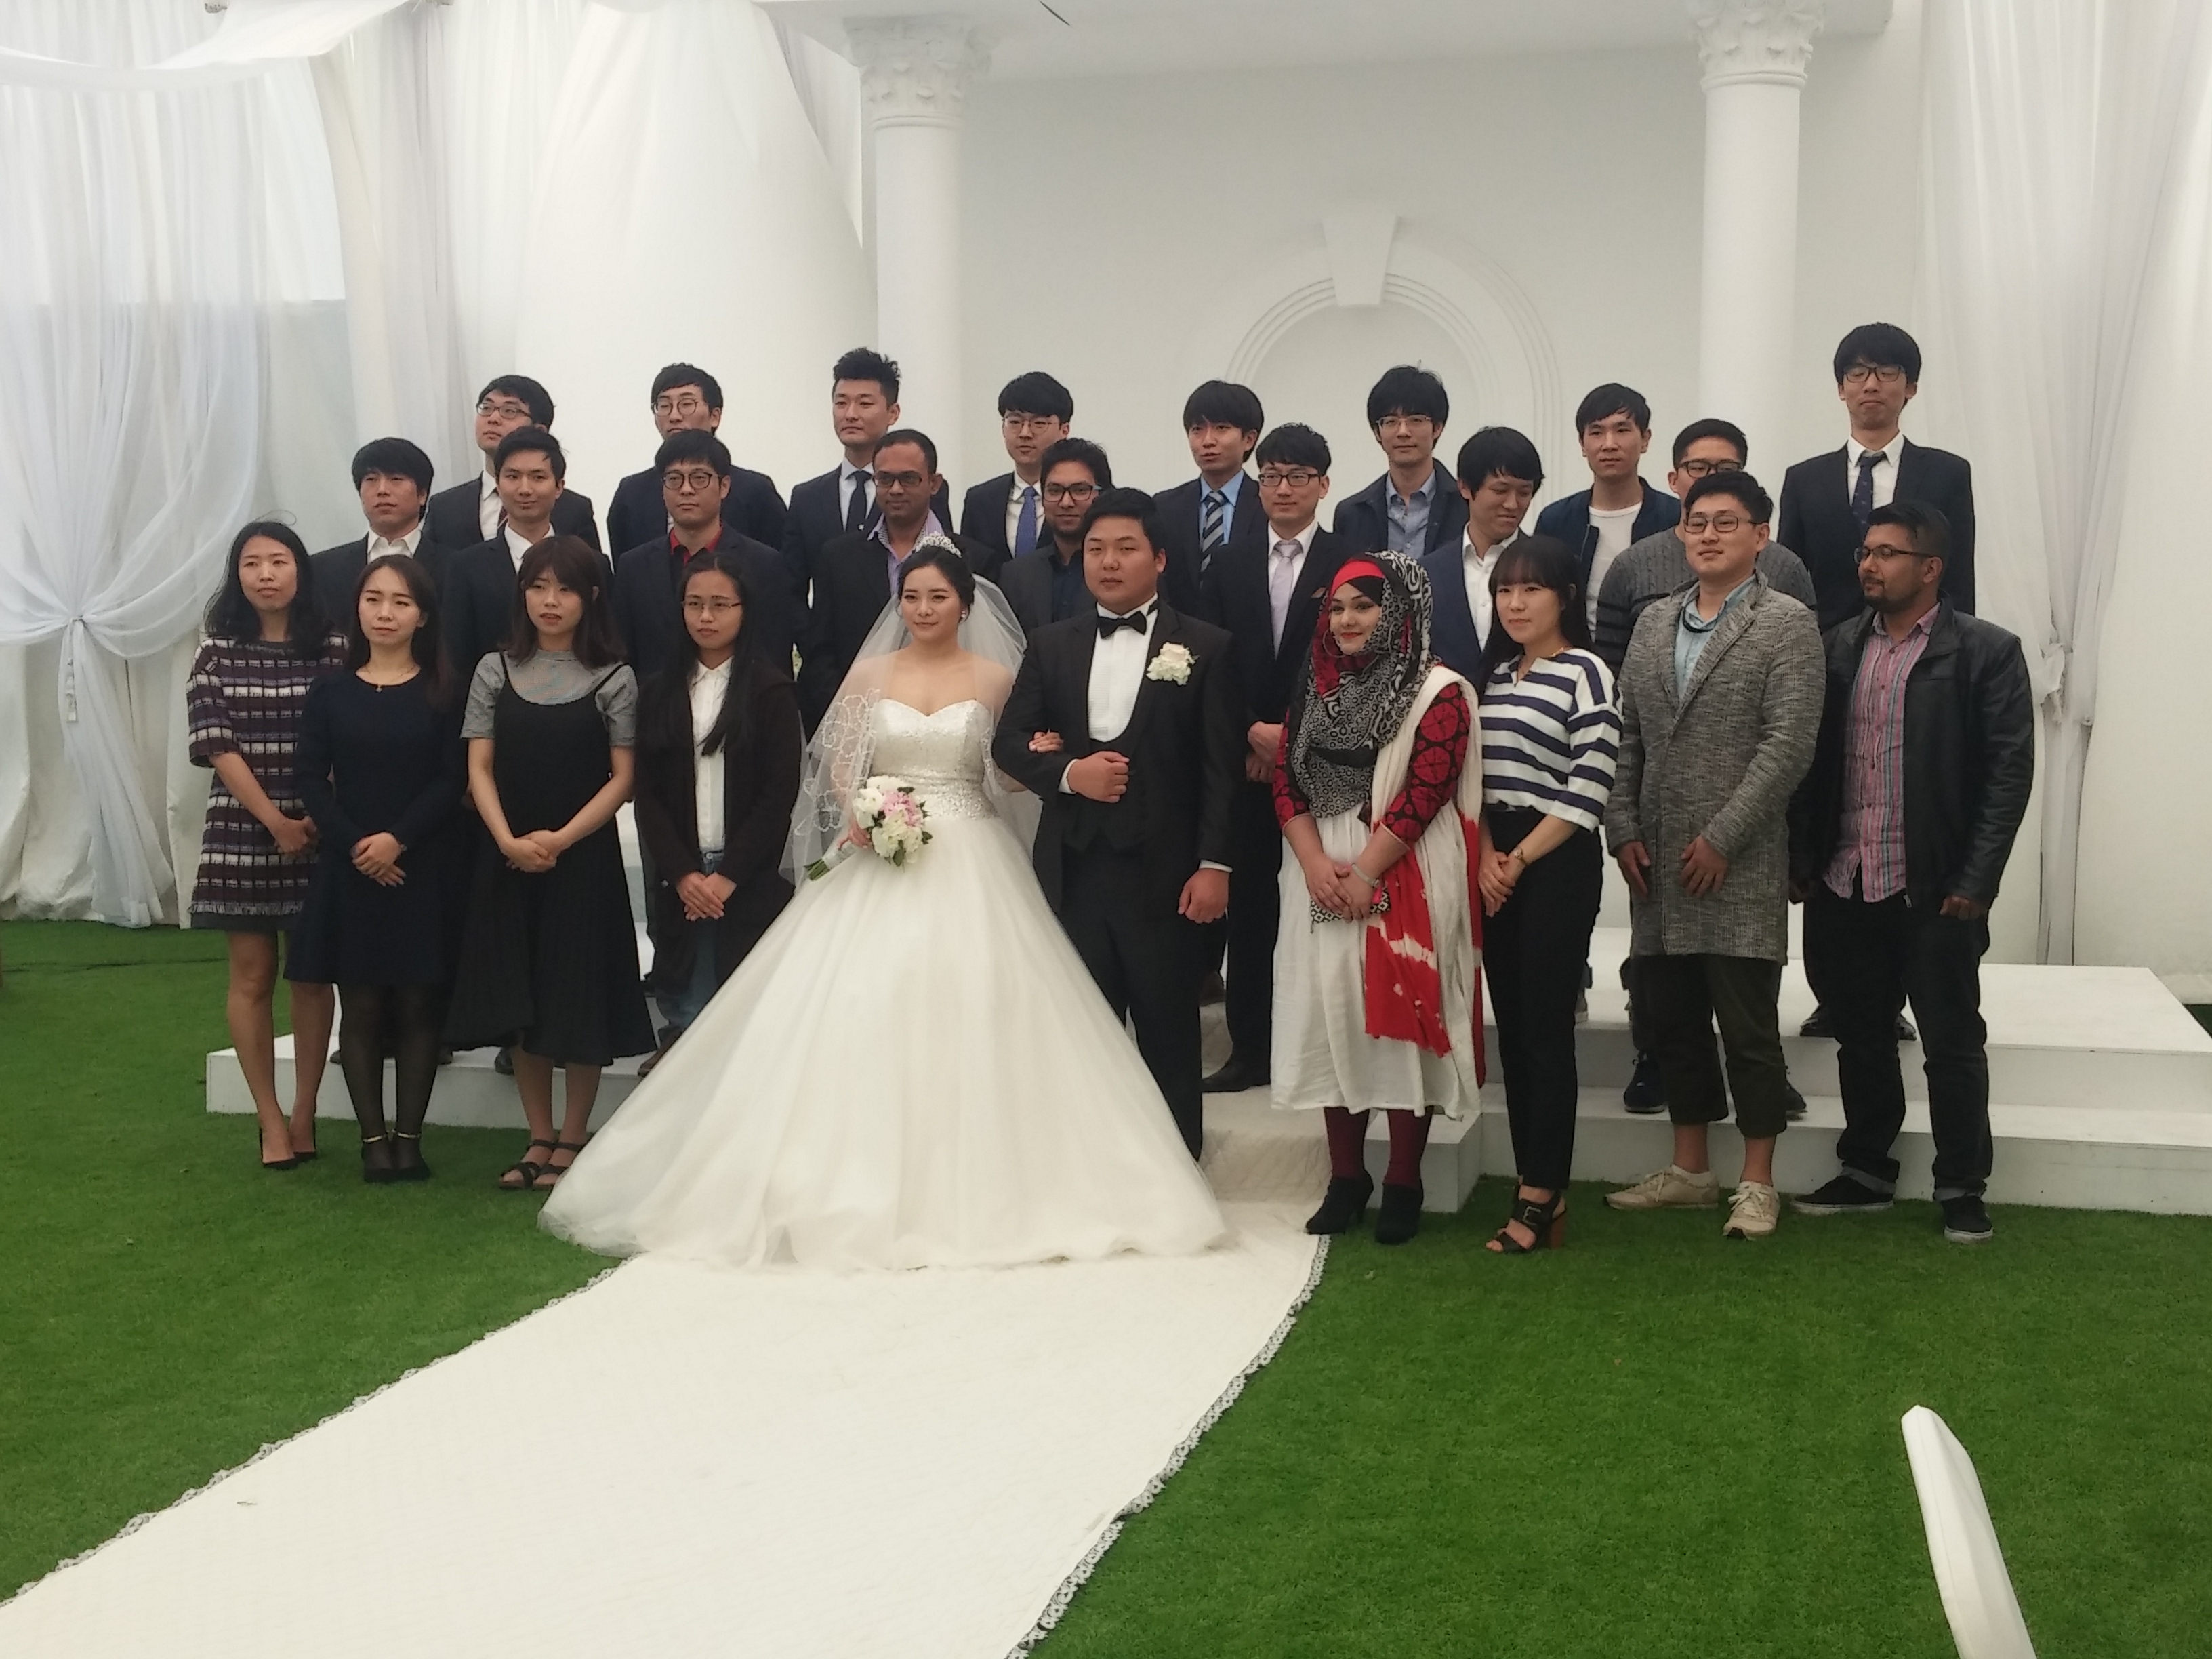 Sung-Gook's wedding 20160430_140740.jpg